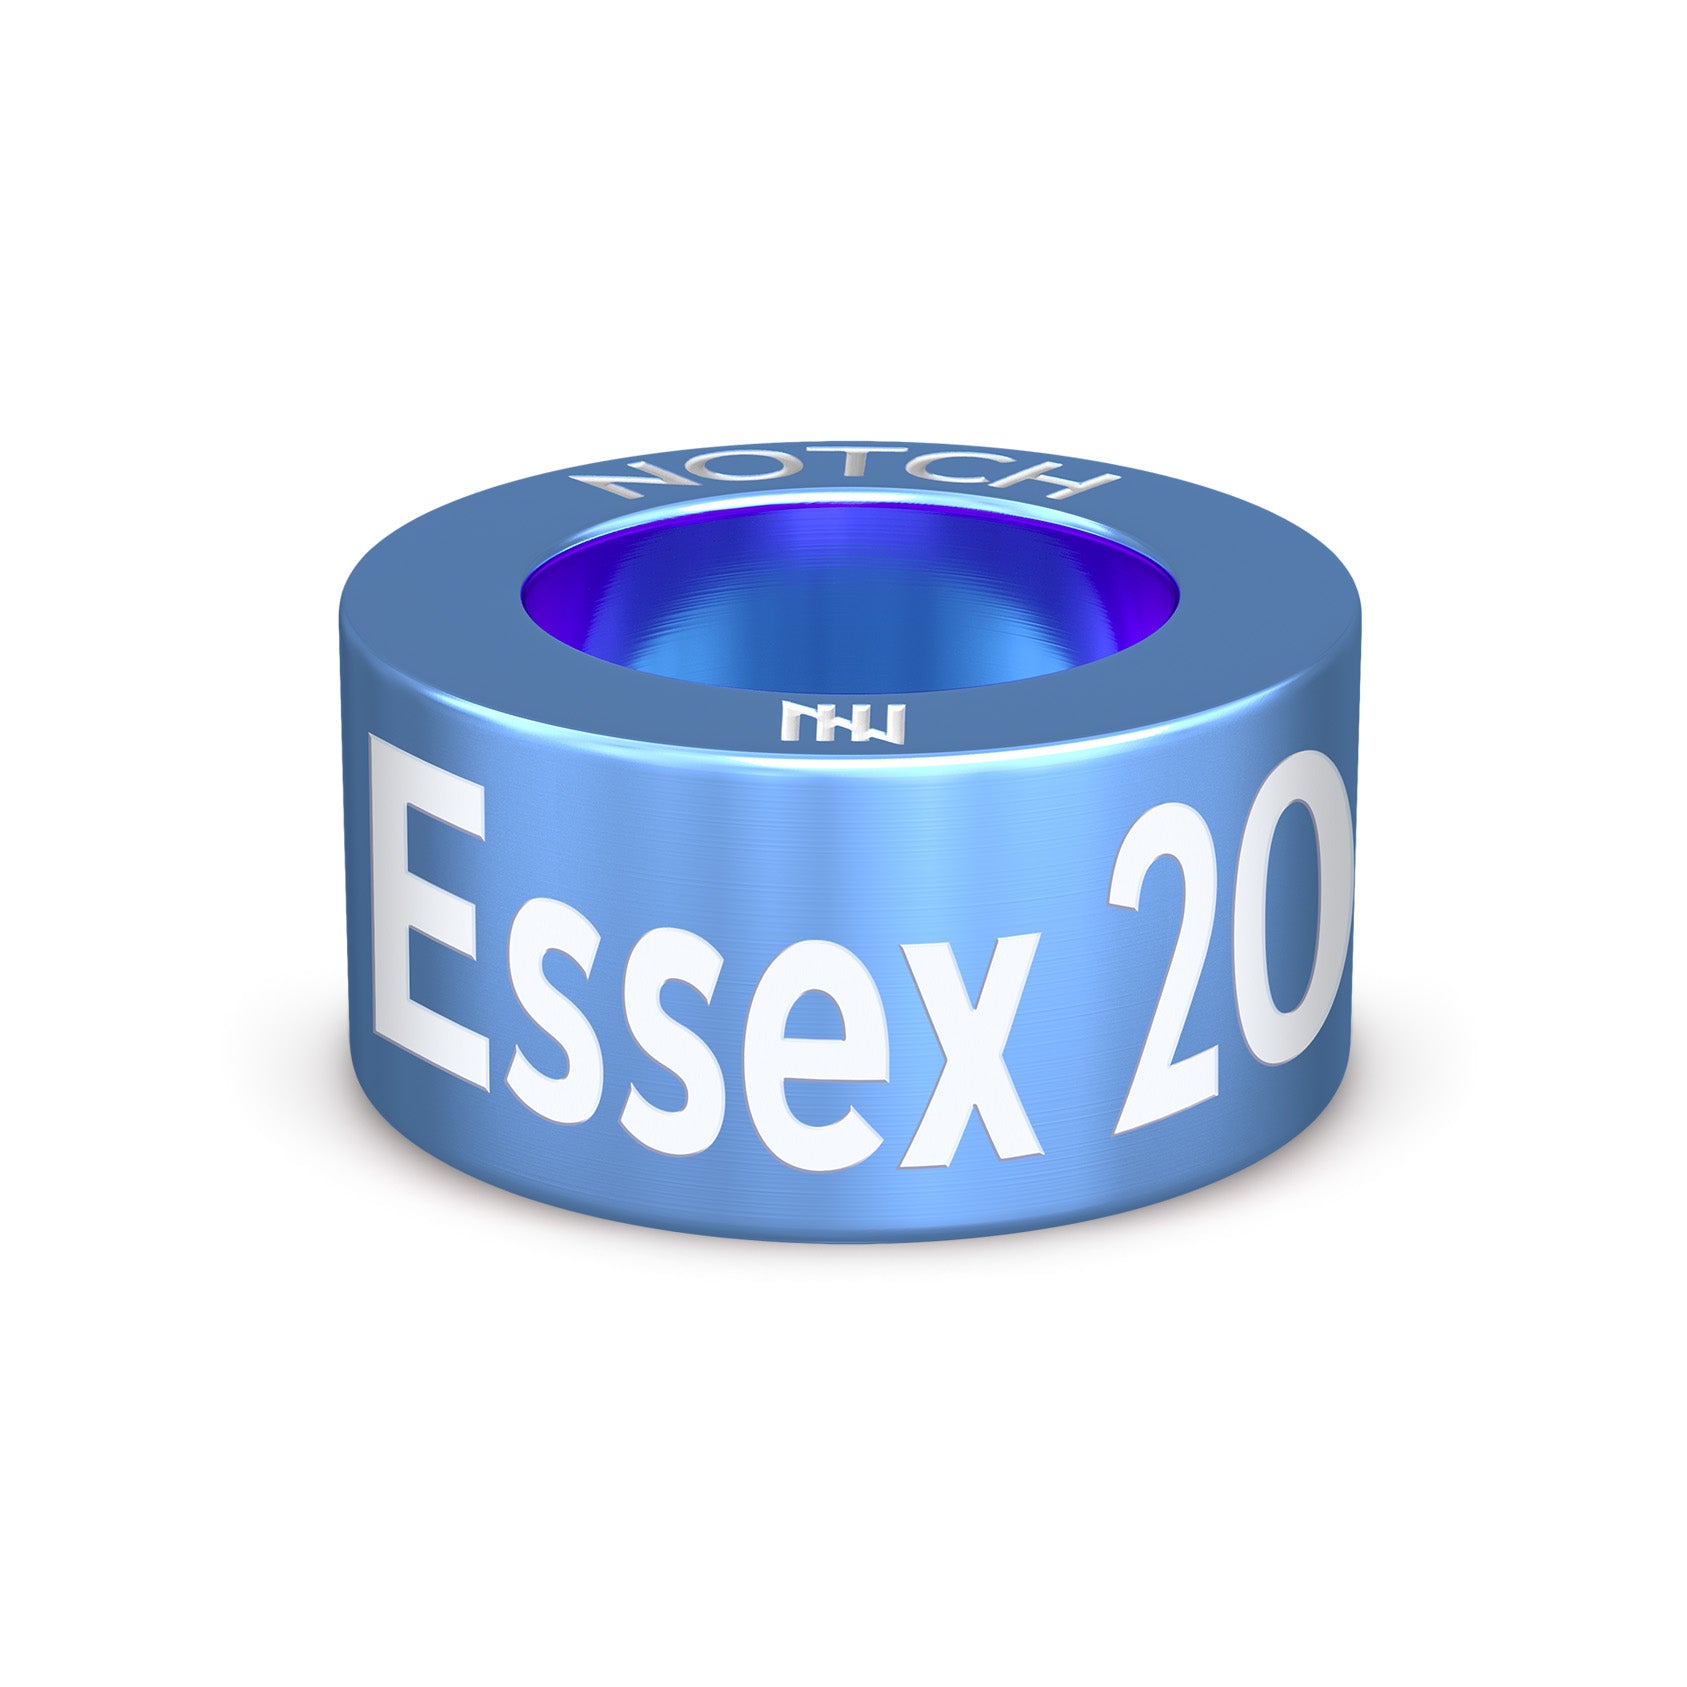 Essex 20 NOTCH Charm